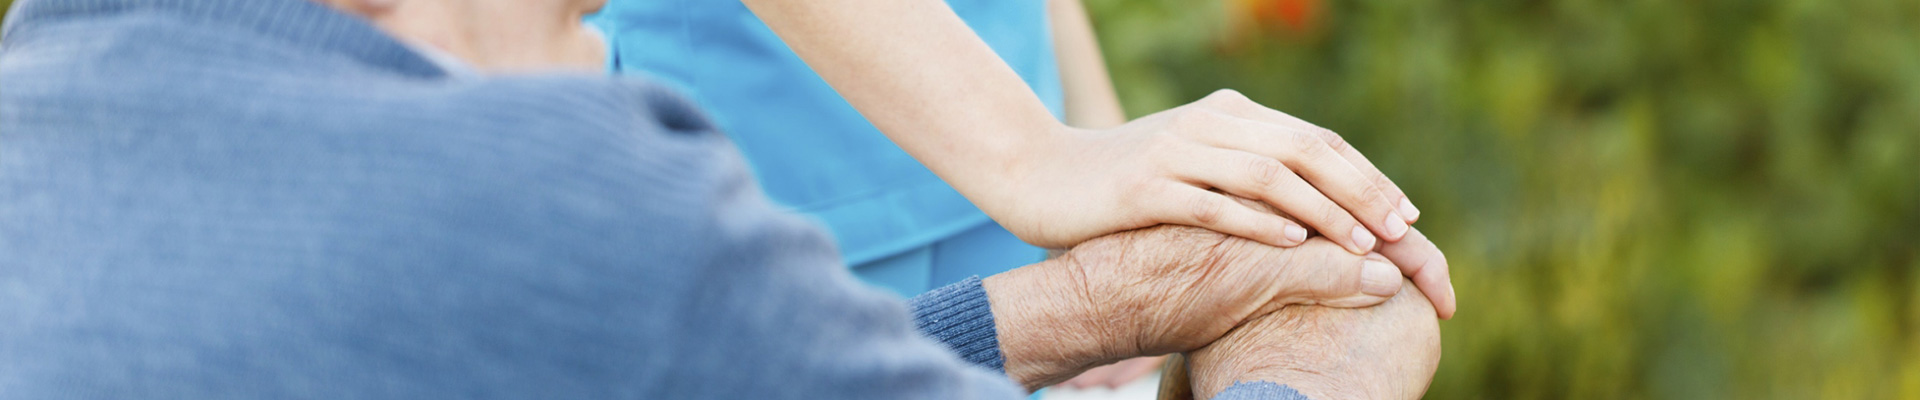 Photo of caretaker's hands lovingly placed on elderly hands